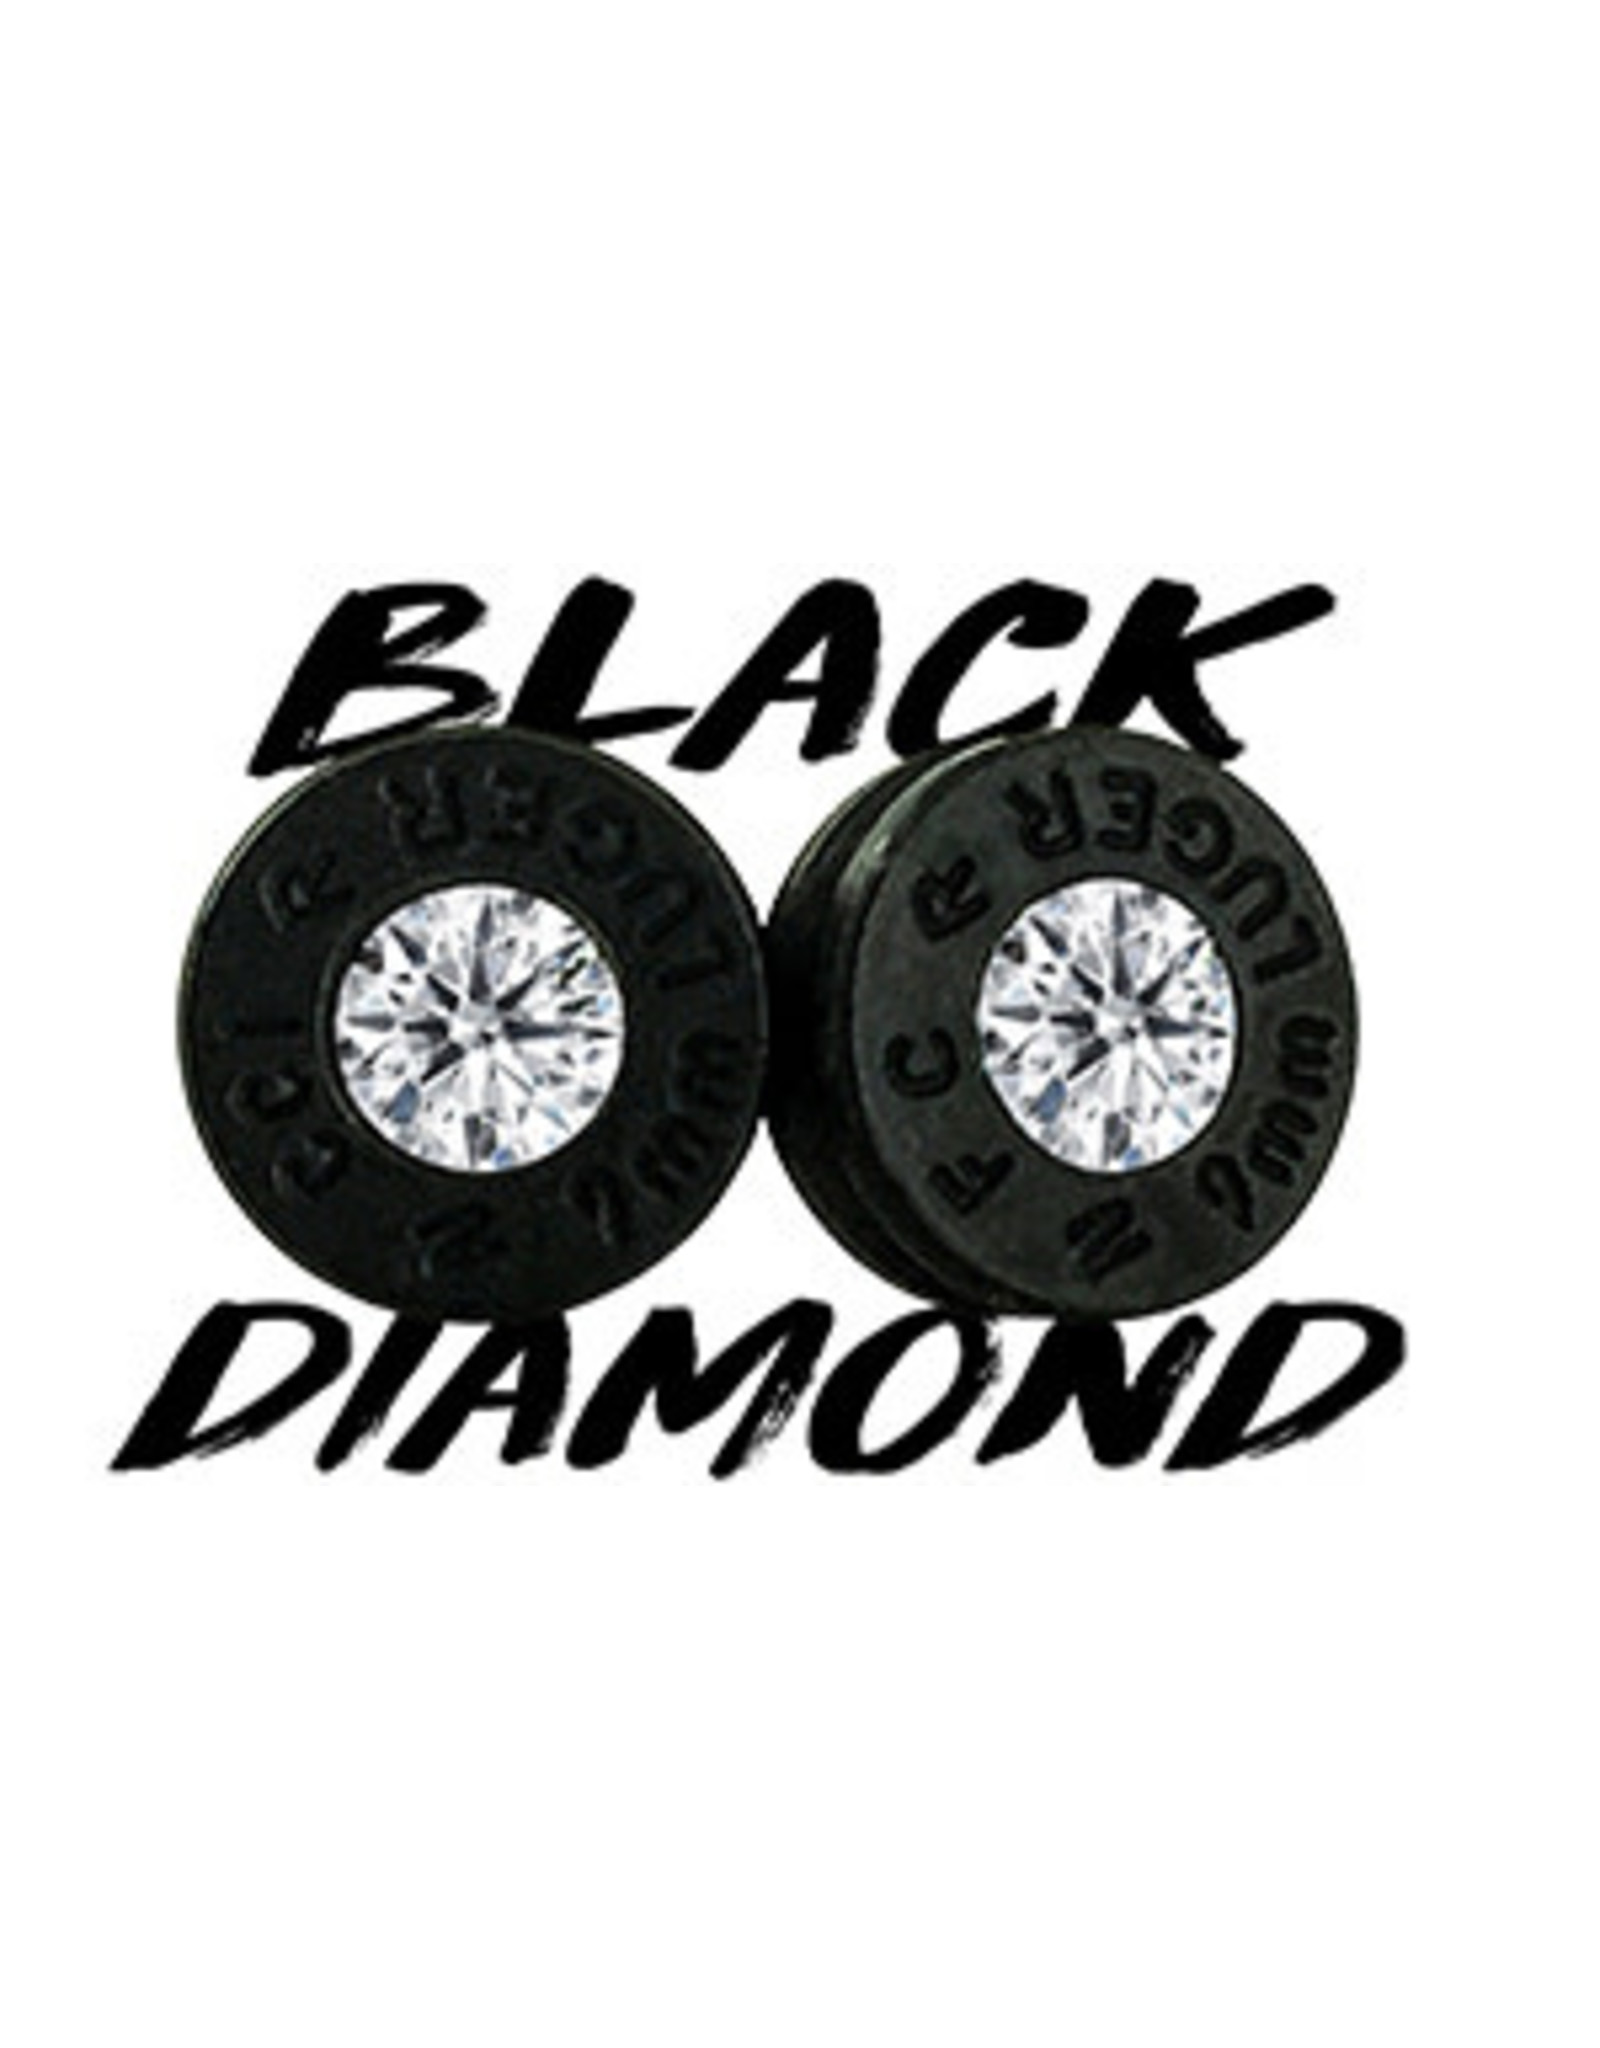 Astarix Bullet Earrings-Diamond